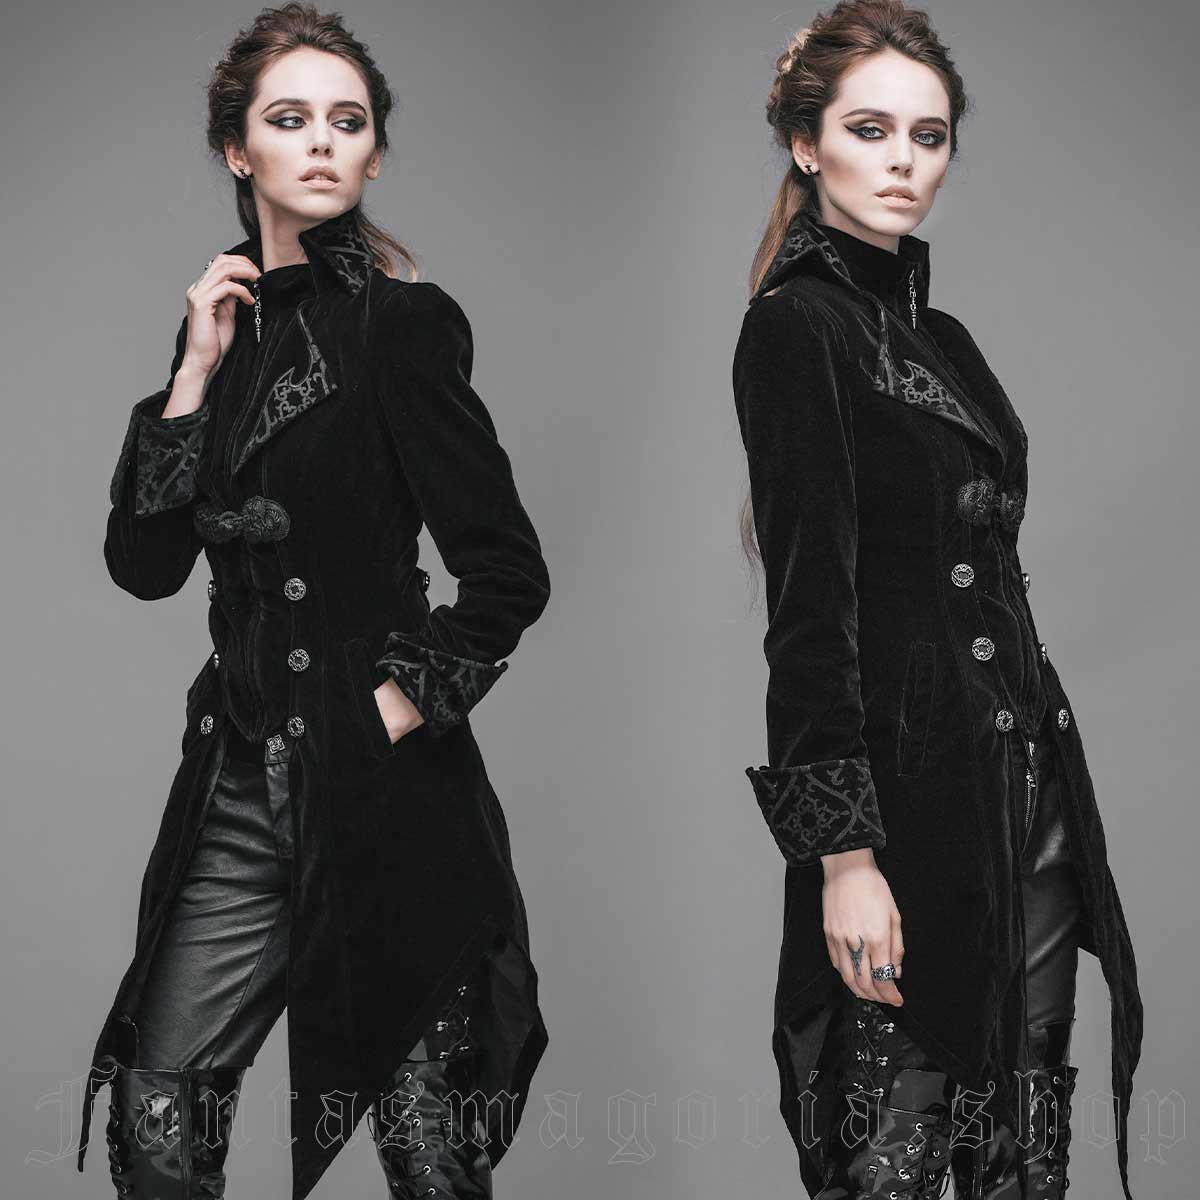 Elfin Black Jacket - Devil Fashion | Fantasmagoria.shop